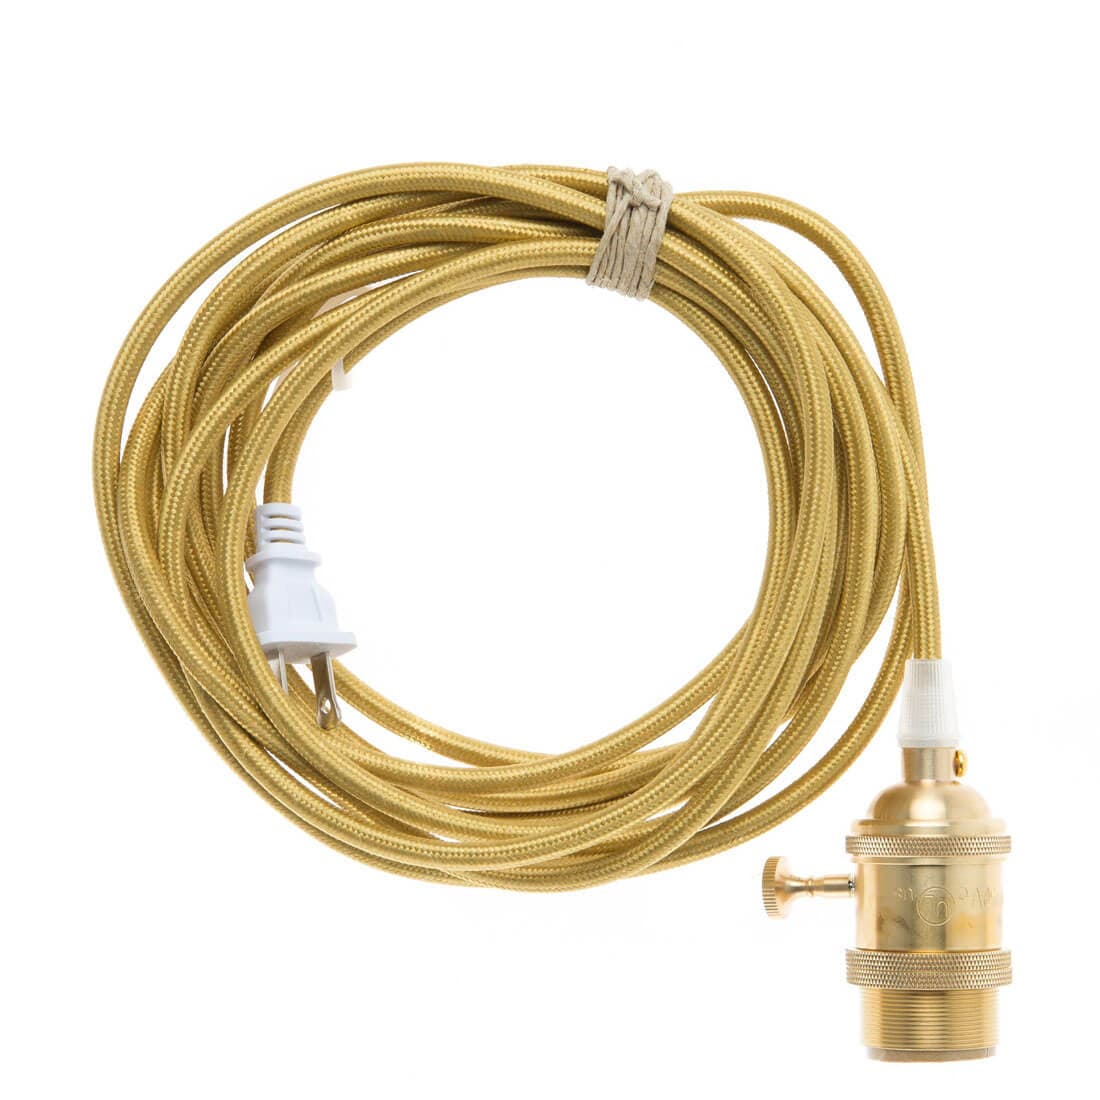 Customize: Brass Plug-In Pendant Light